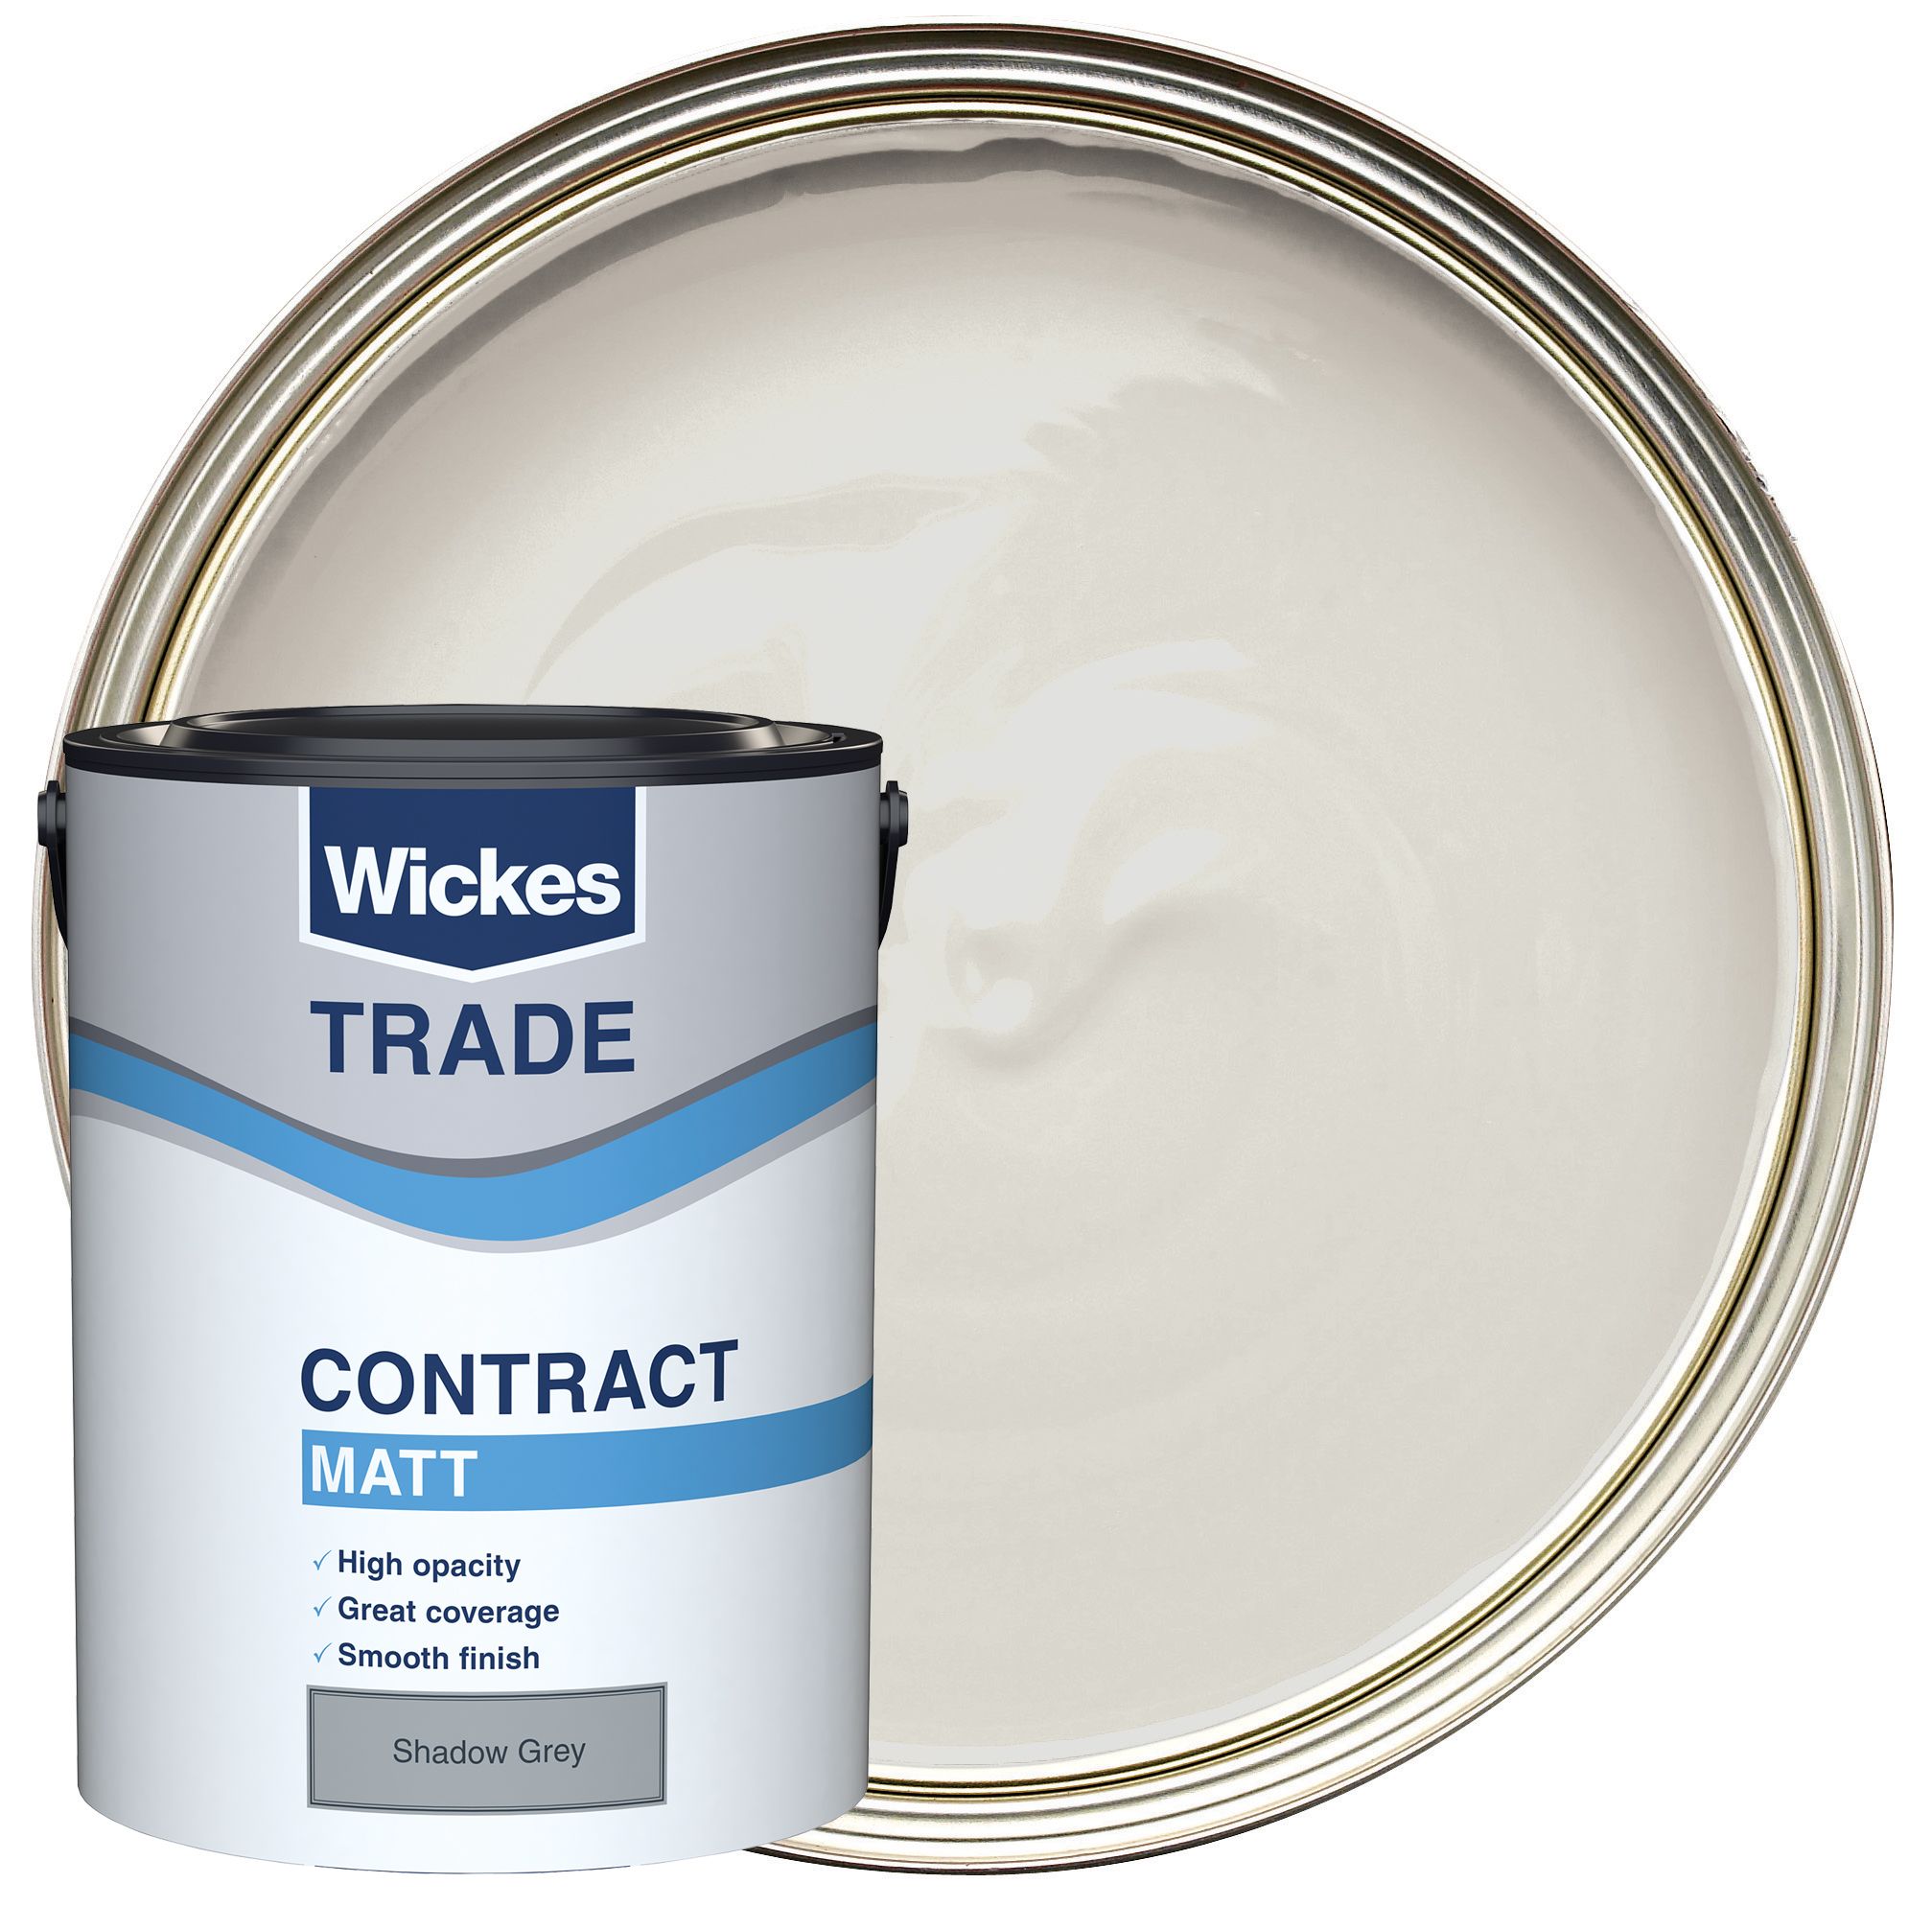 Image of Wickes Trade Contract Matt Emulsion Paint - Shadow Grey - 5L